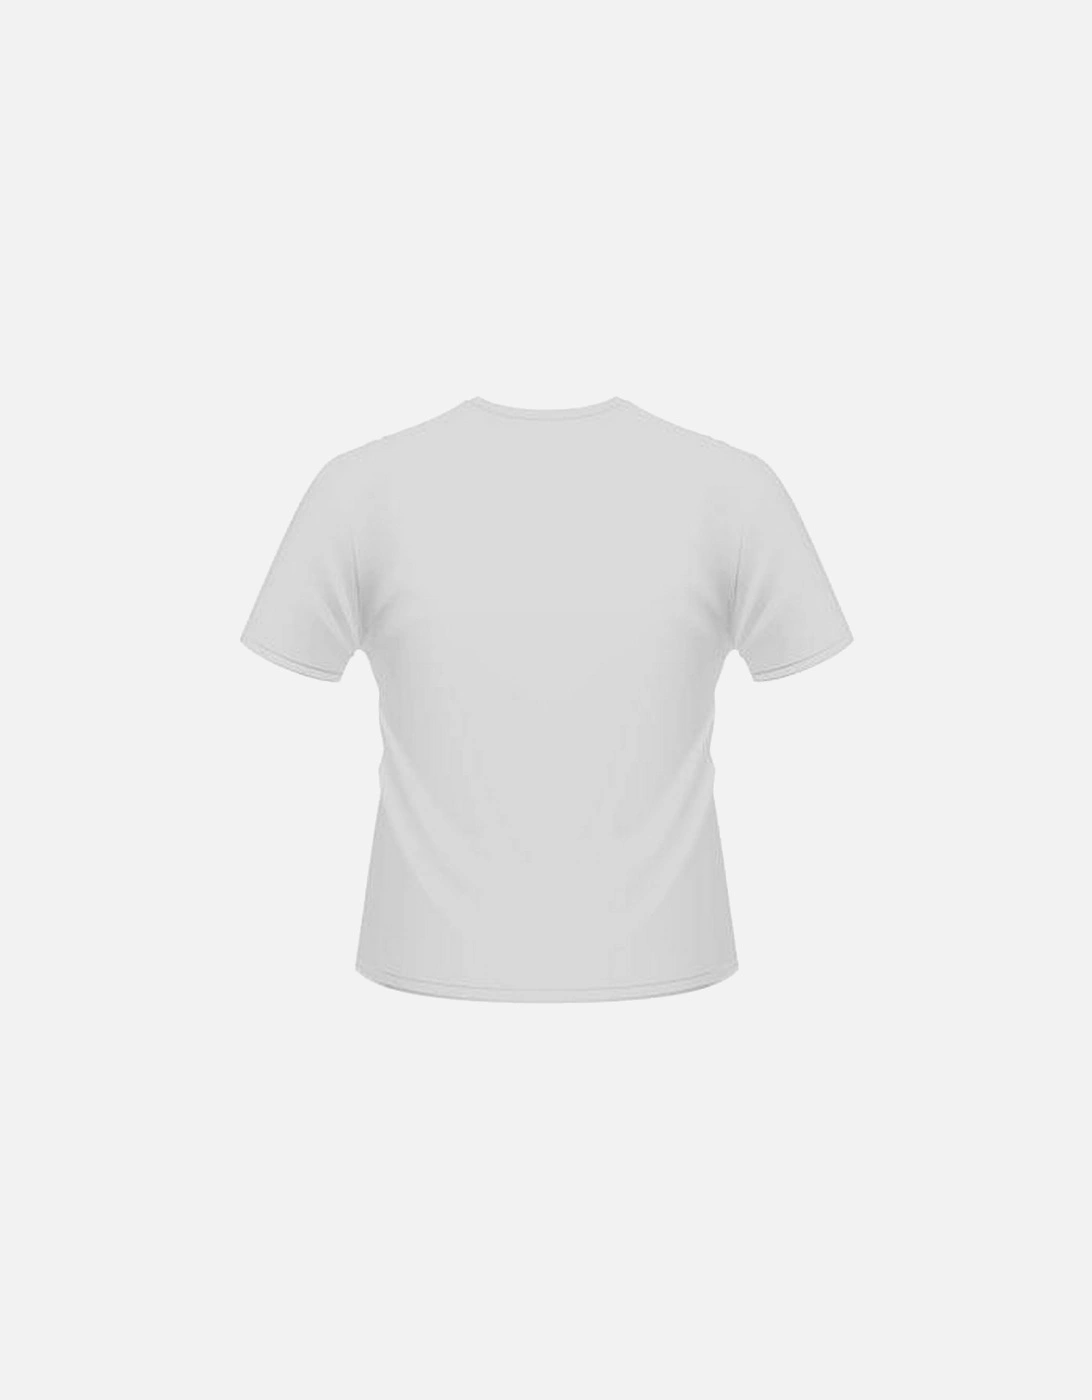 Unisex Adult Crapper T-Shirt